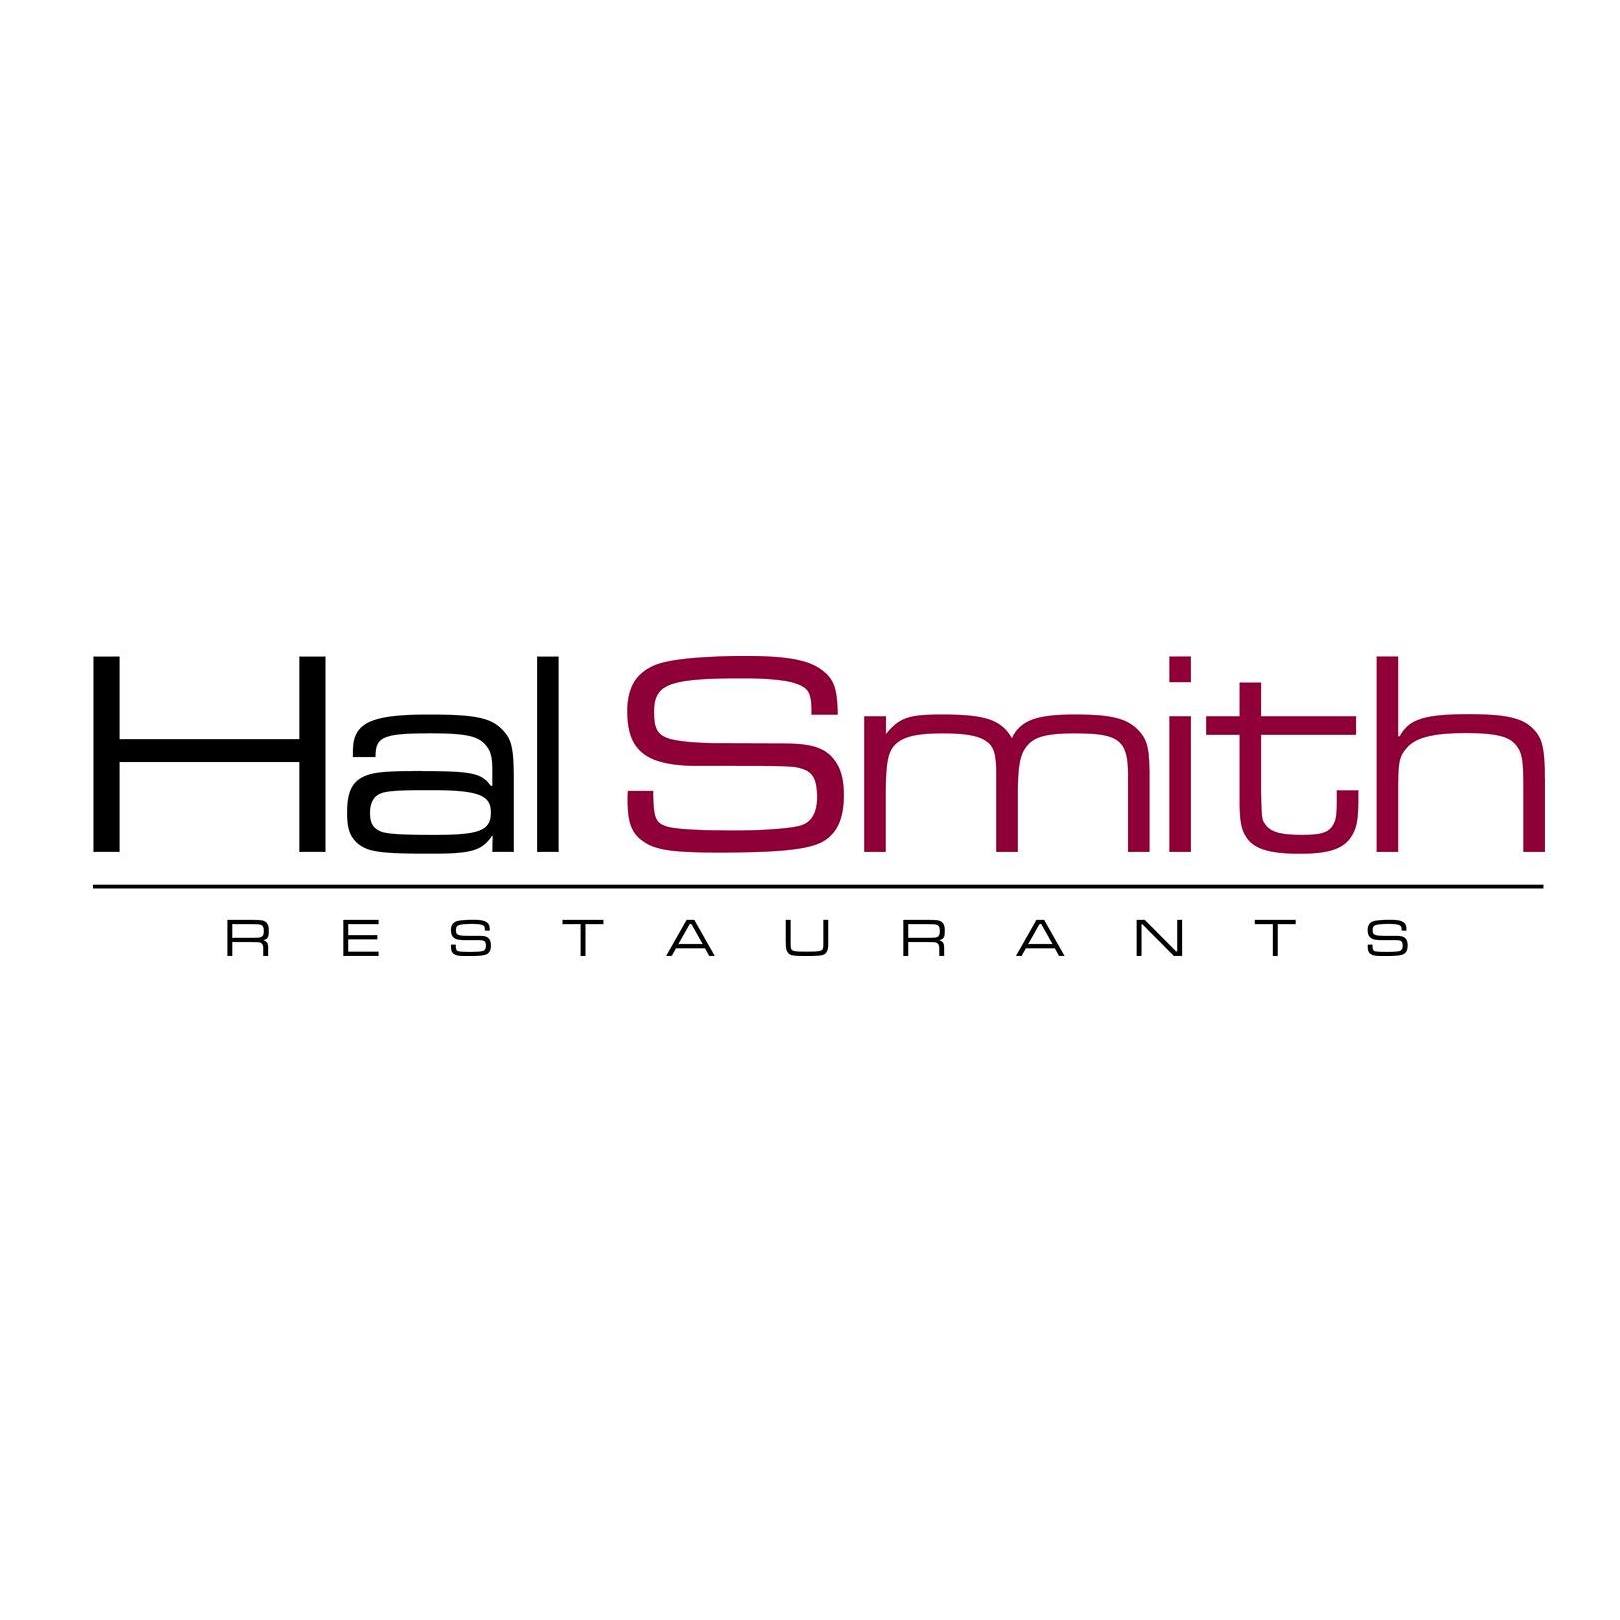 Hal Smith Restaurants